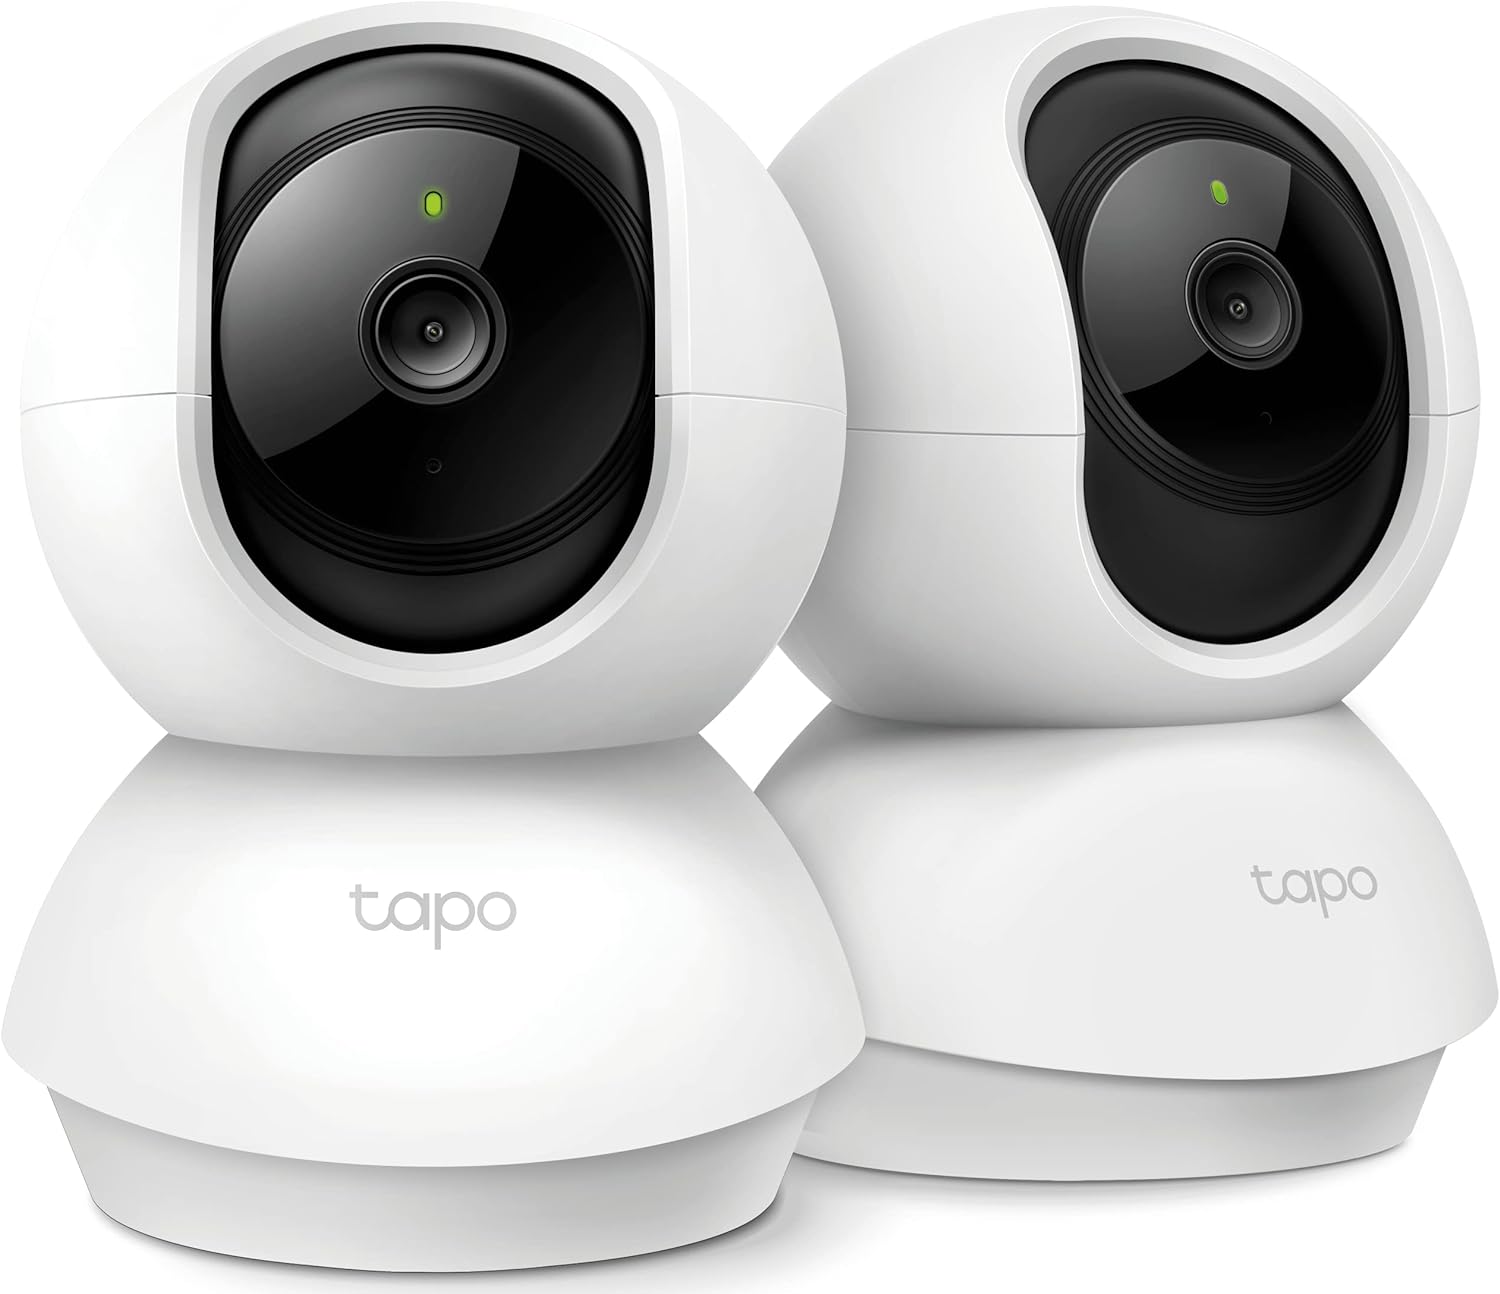 Tapo C210P2 Pan/Tilt Smart Security Camera 360°, 2K 3MP High Definition, 2-way Audio